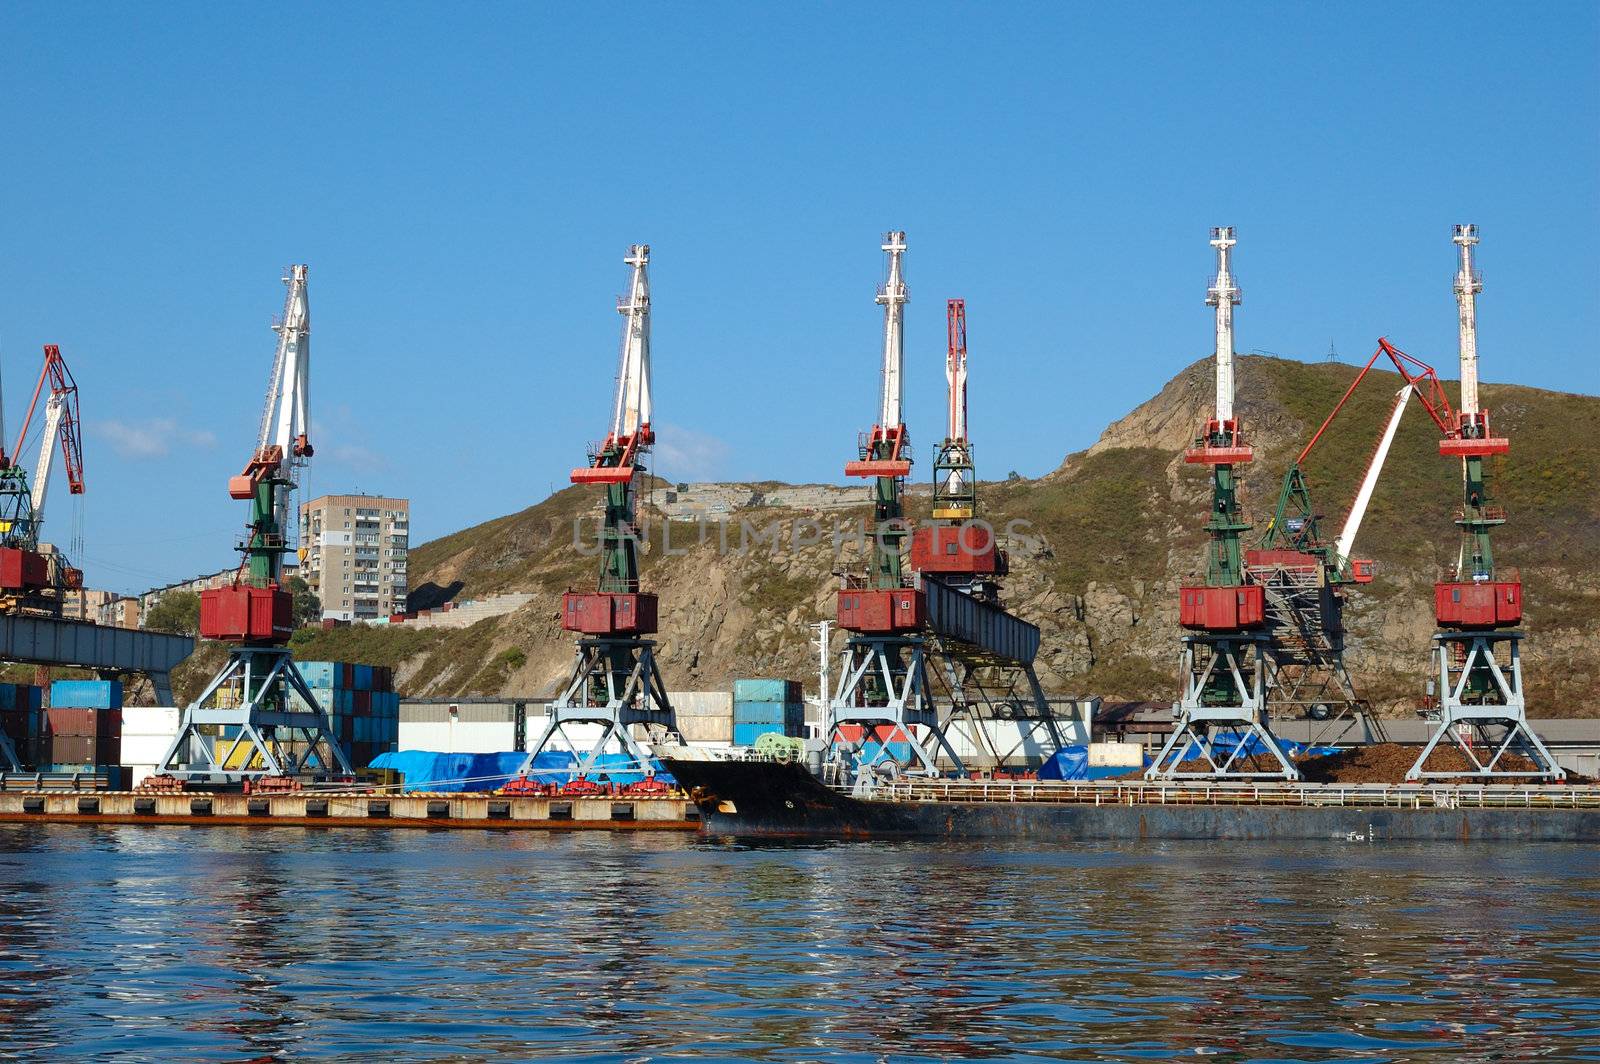 Shipment pier (stage) in russian seaport (Vladivostok).